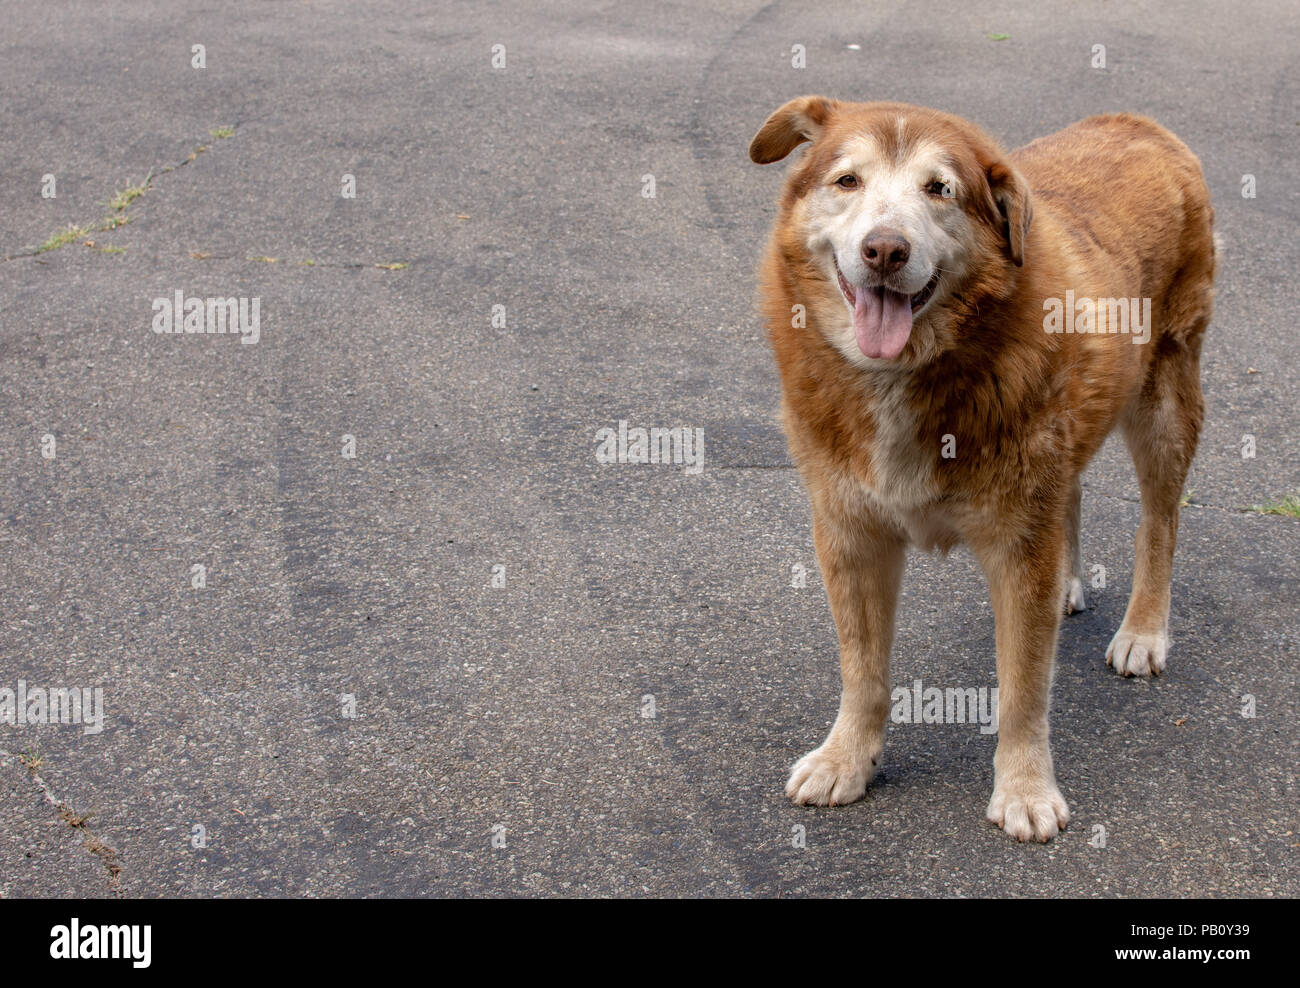 Senior dog saying hello Stock Photo